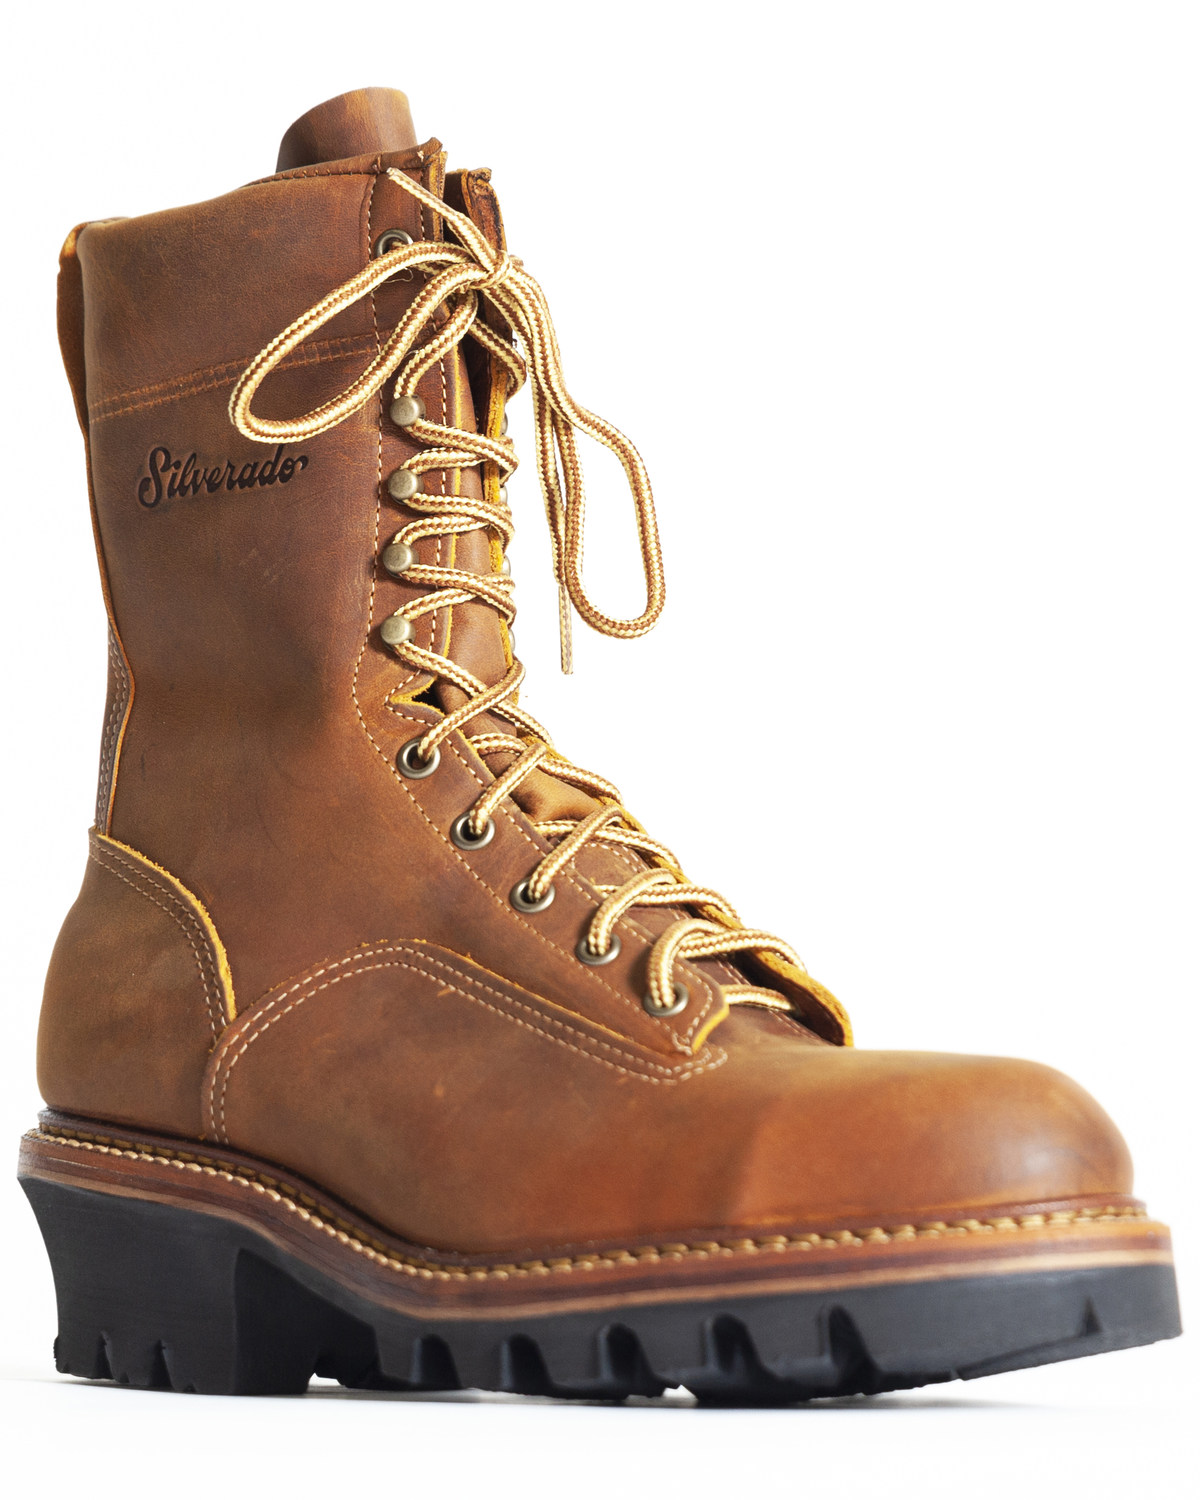 Silverado Men's 9" Logger Work Boots - Steel Toe